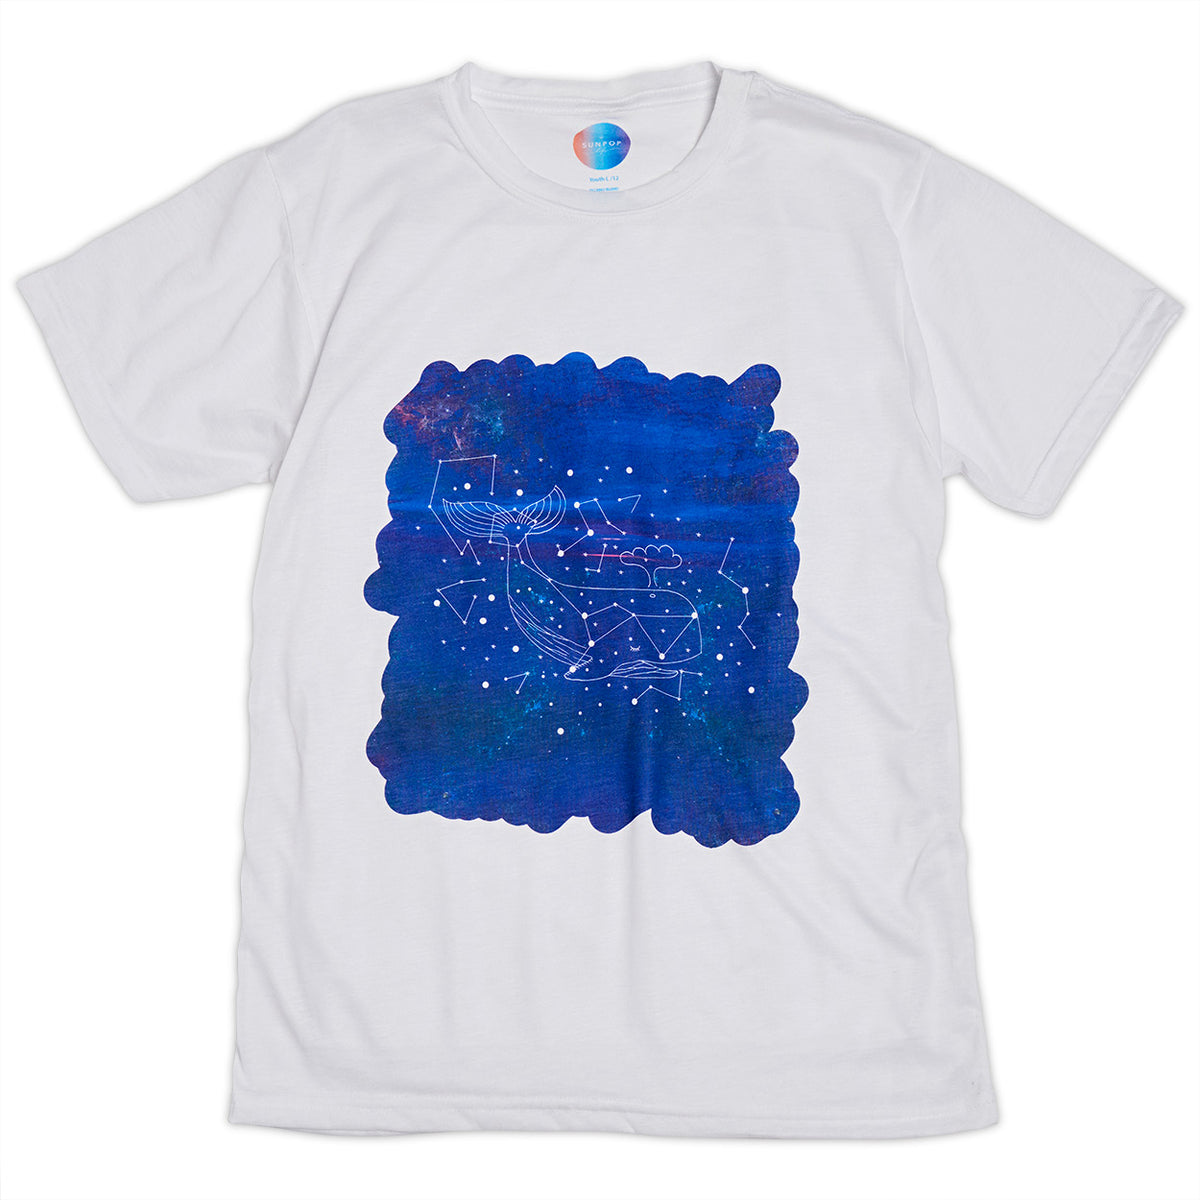 Kids Whale Graphic Tshirt Size Xs L White Purple Unisex Cosmos Cetus Constellations Sunpoplife